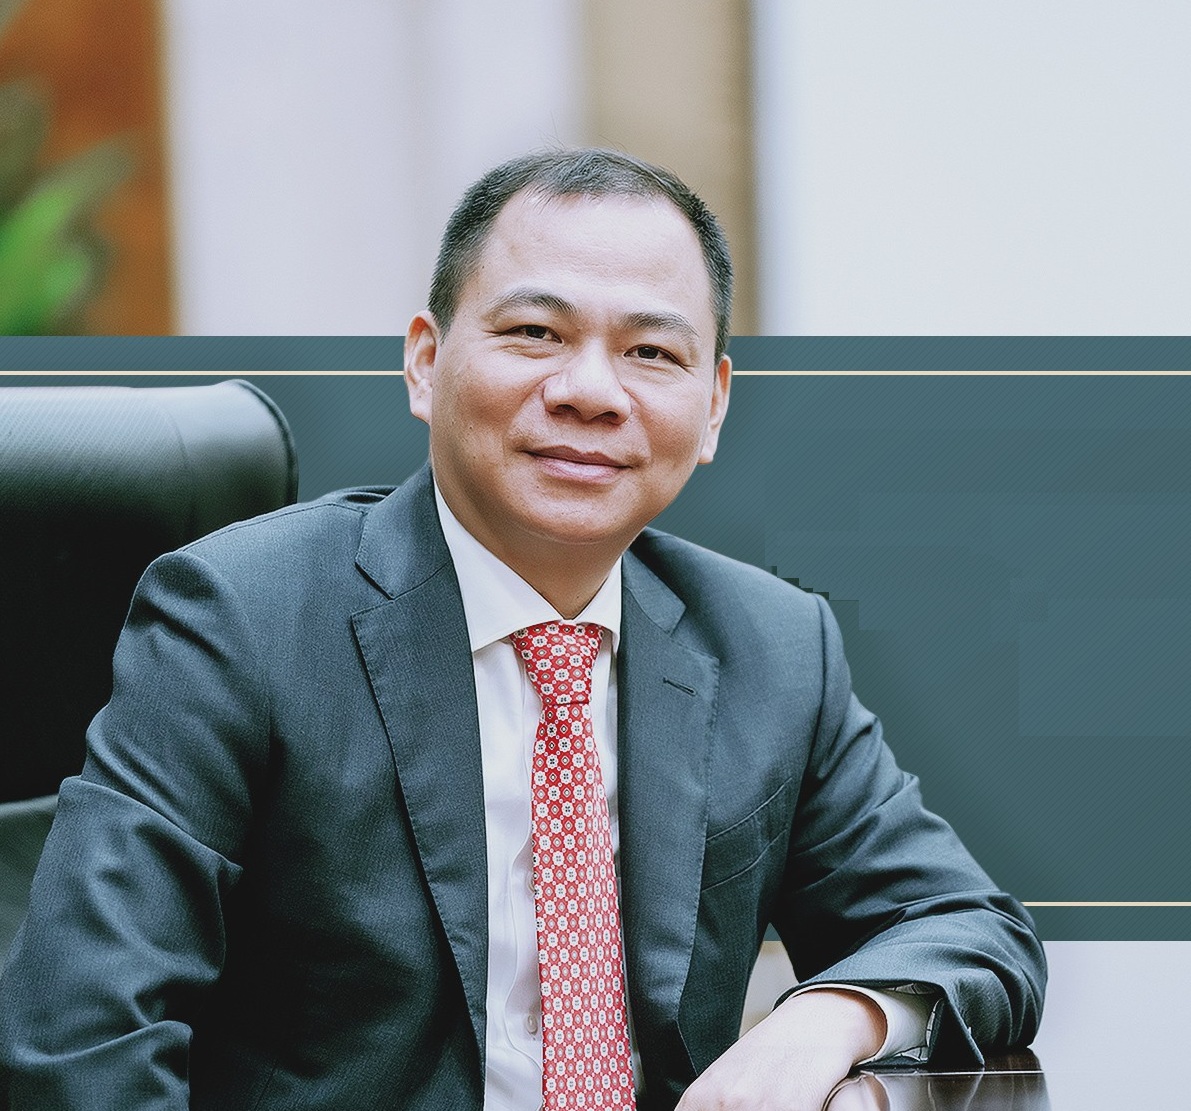 Conversation with Vietnamese billionaire Pham Nhat Vuong - Part 3